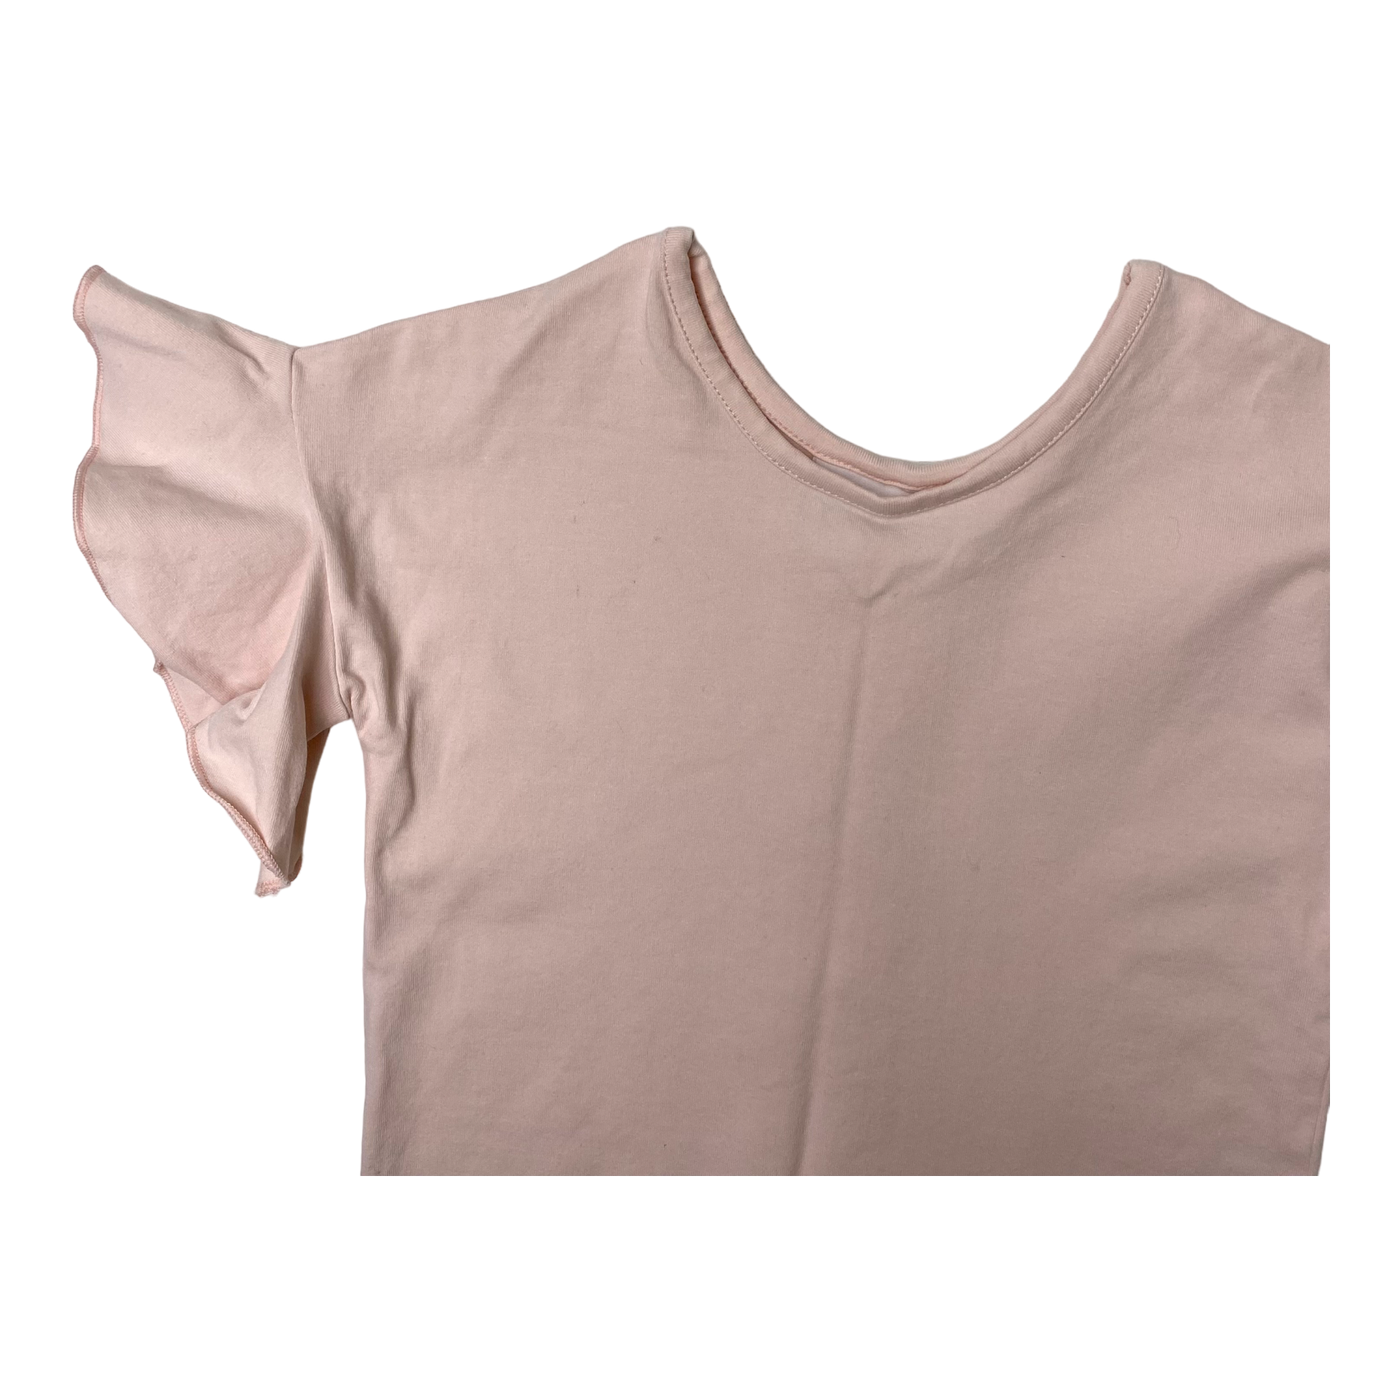 Gugguu frill t-shirt, pink | 110cm